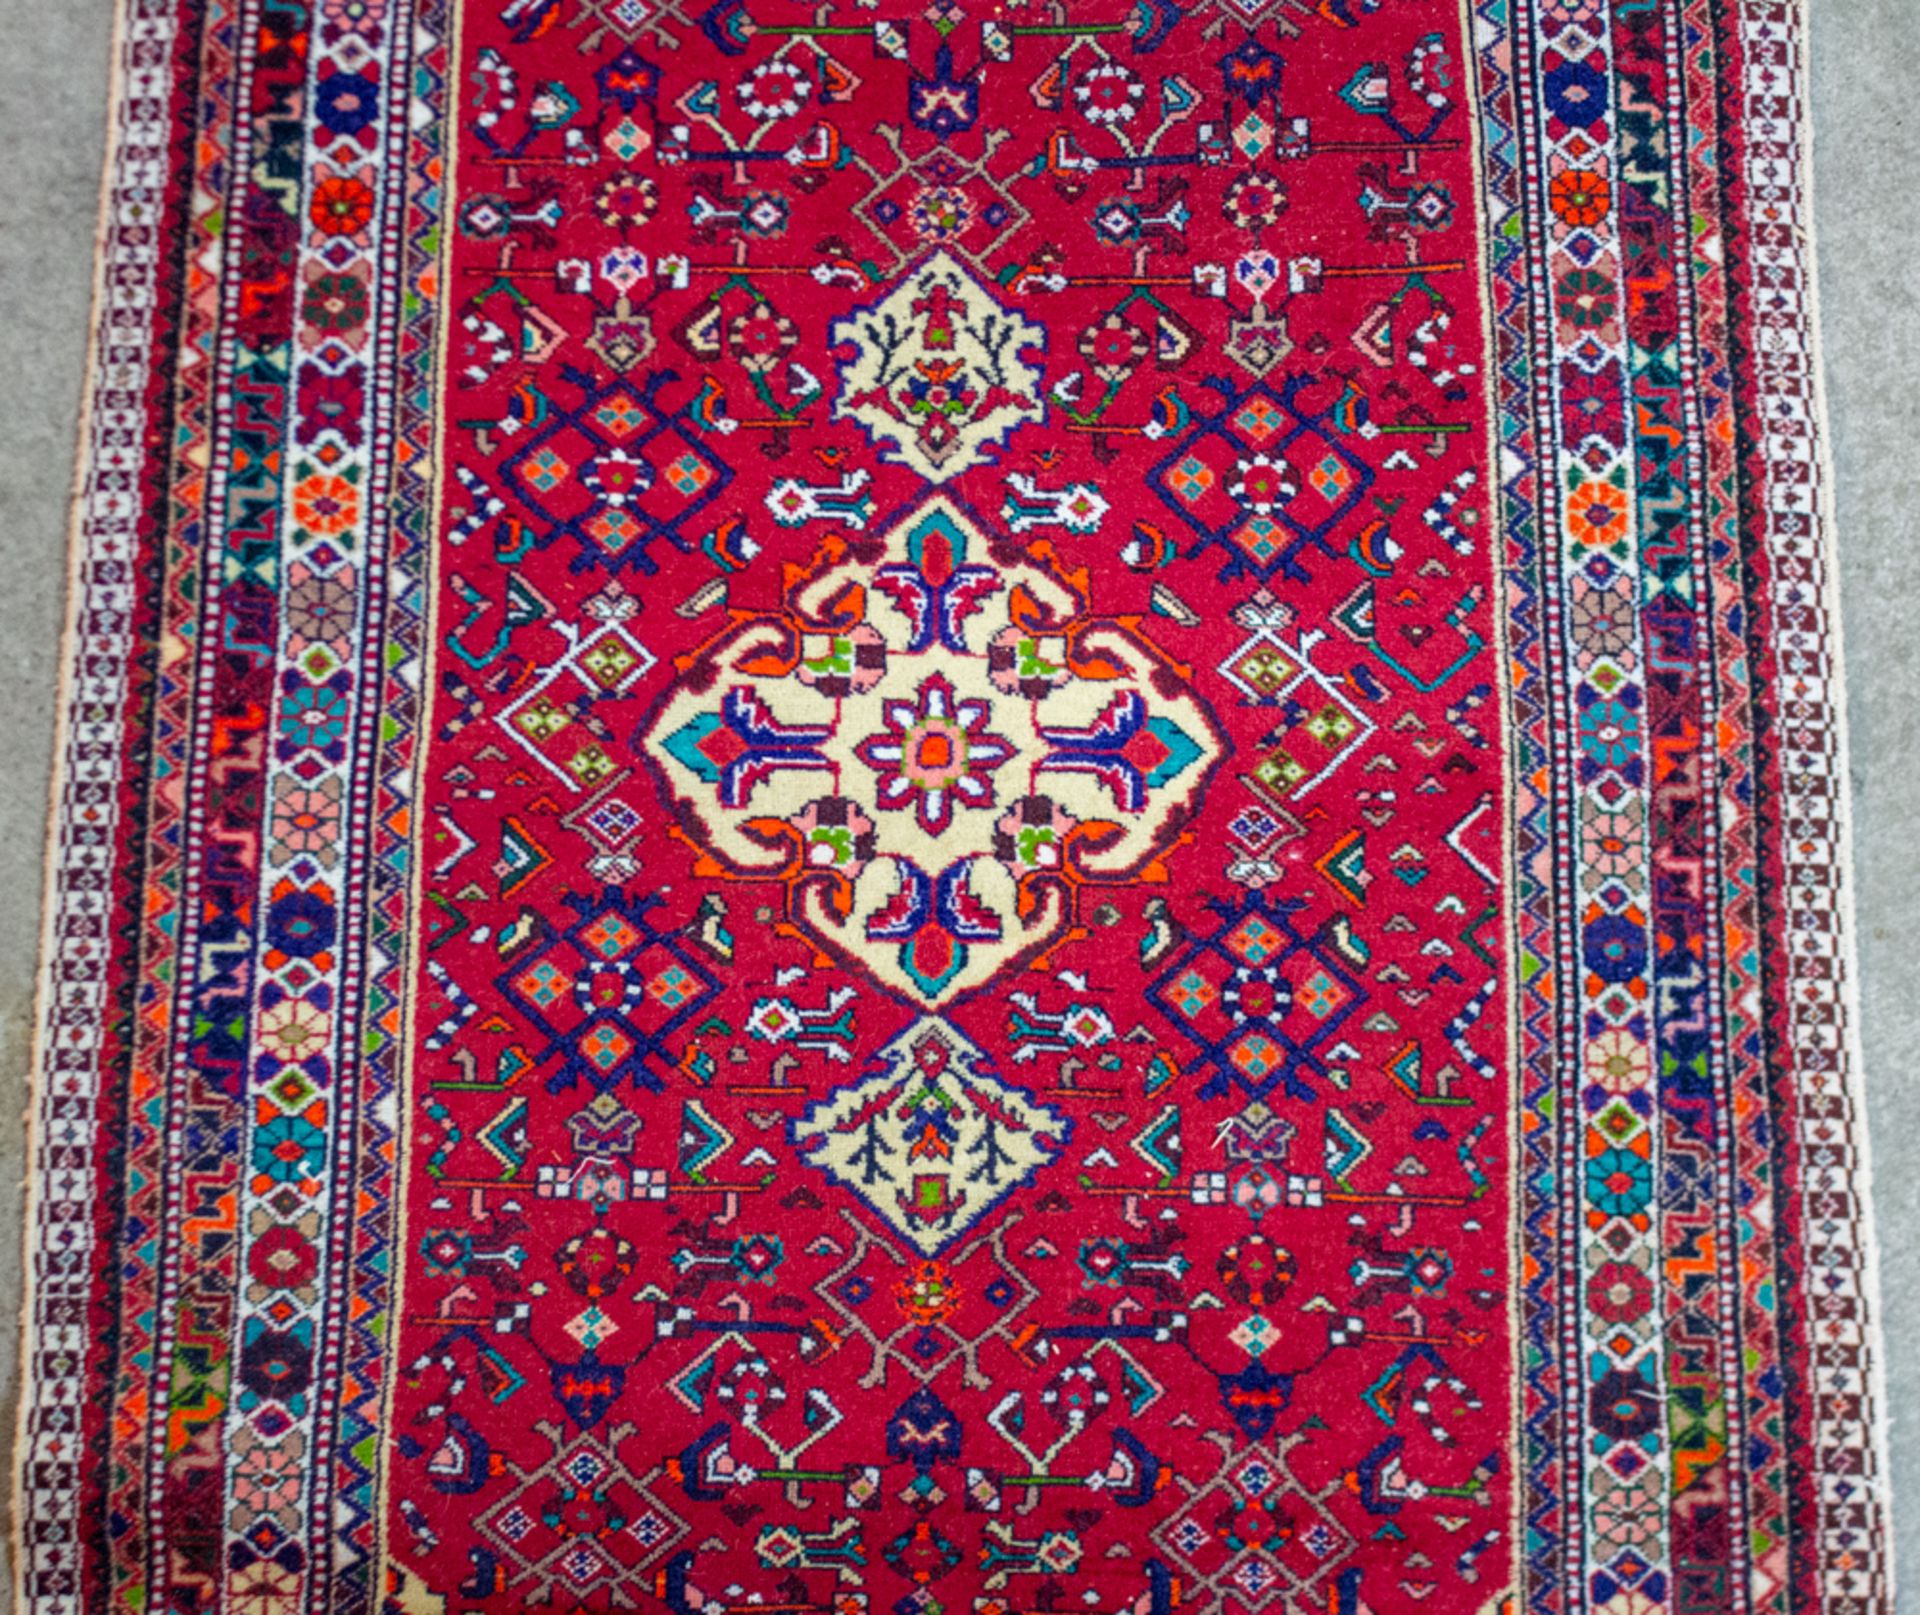 Farbenprächtiger Teppich in Rottönen. - Image 3 of 6